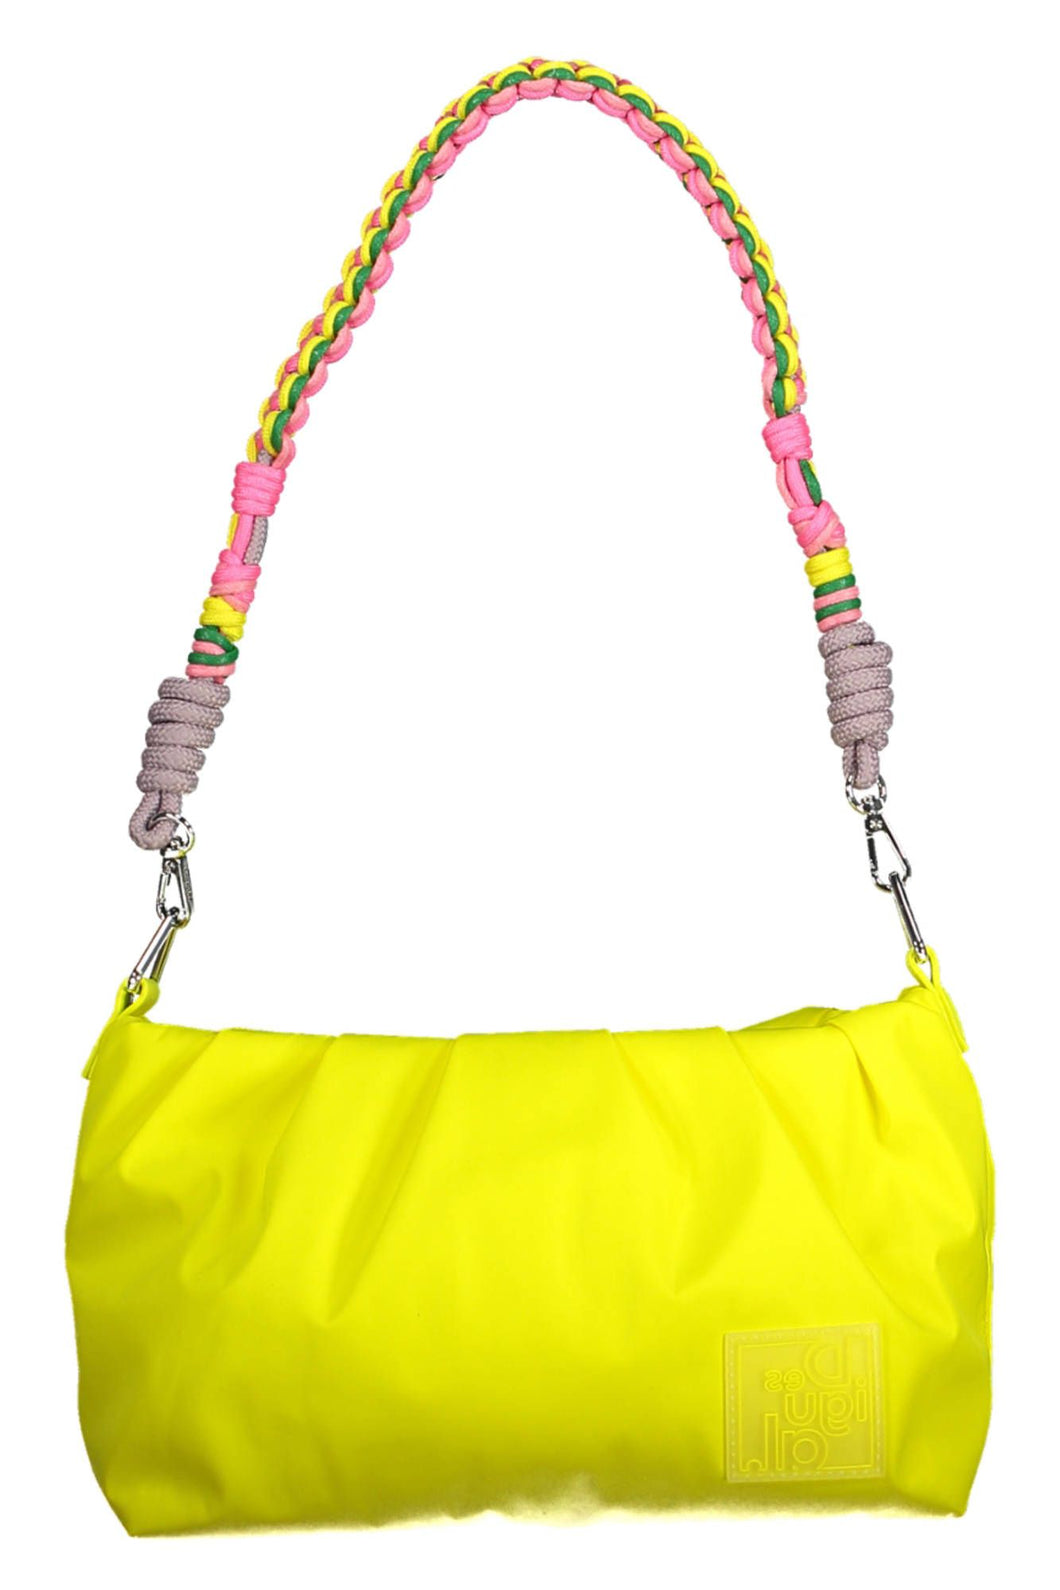 Desigual Yellow Polyester Handbag